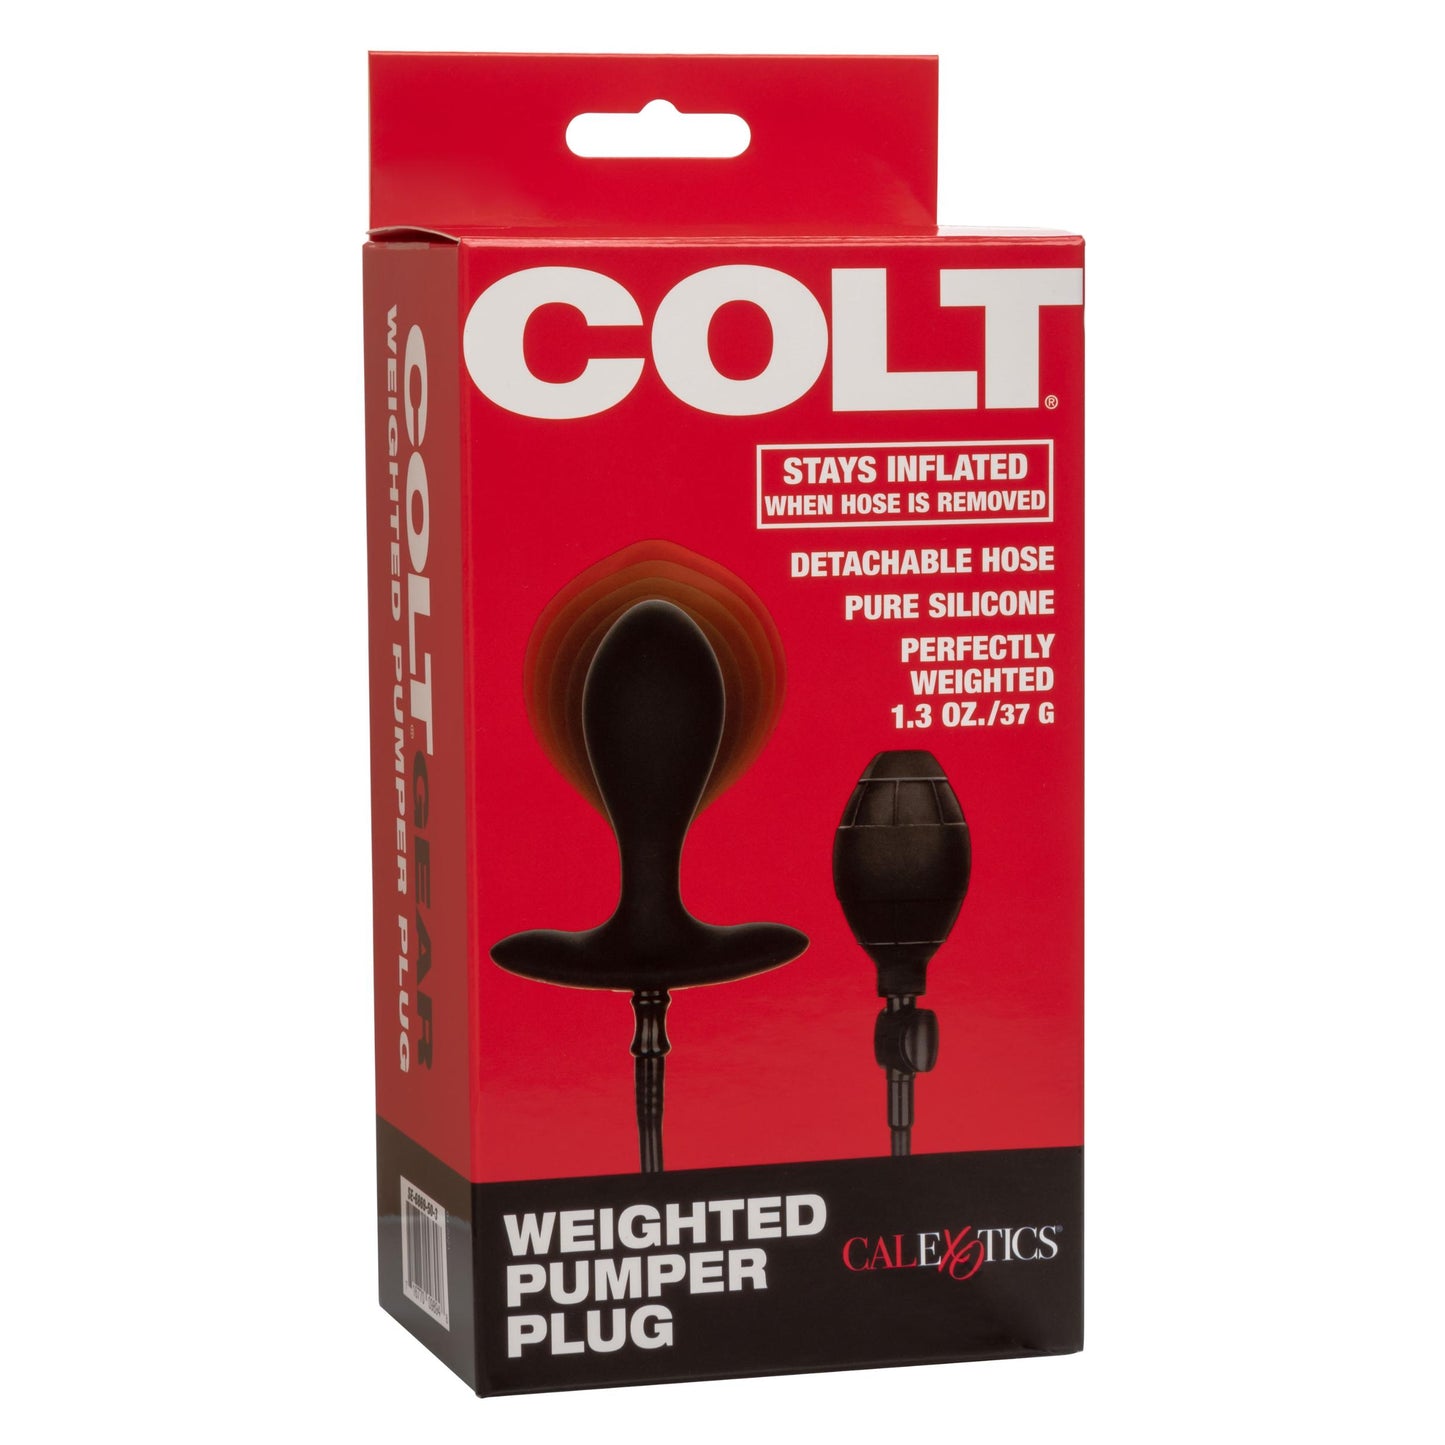 Colt Weighted Pumper Plug